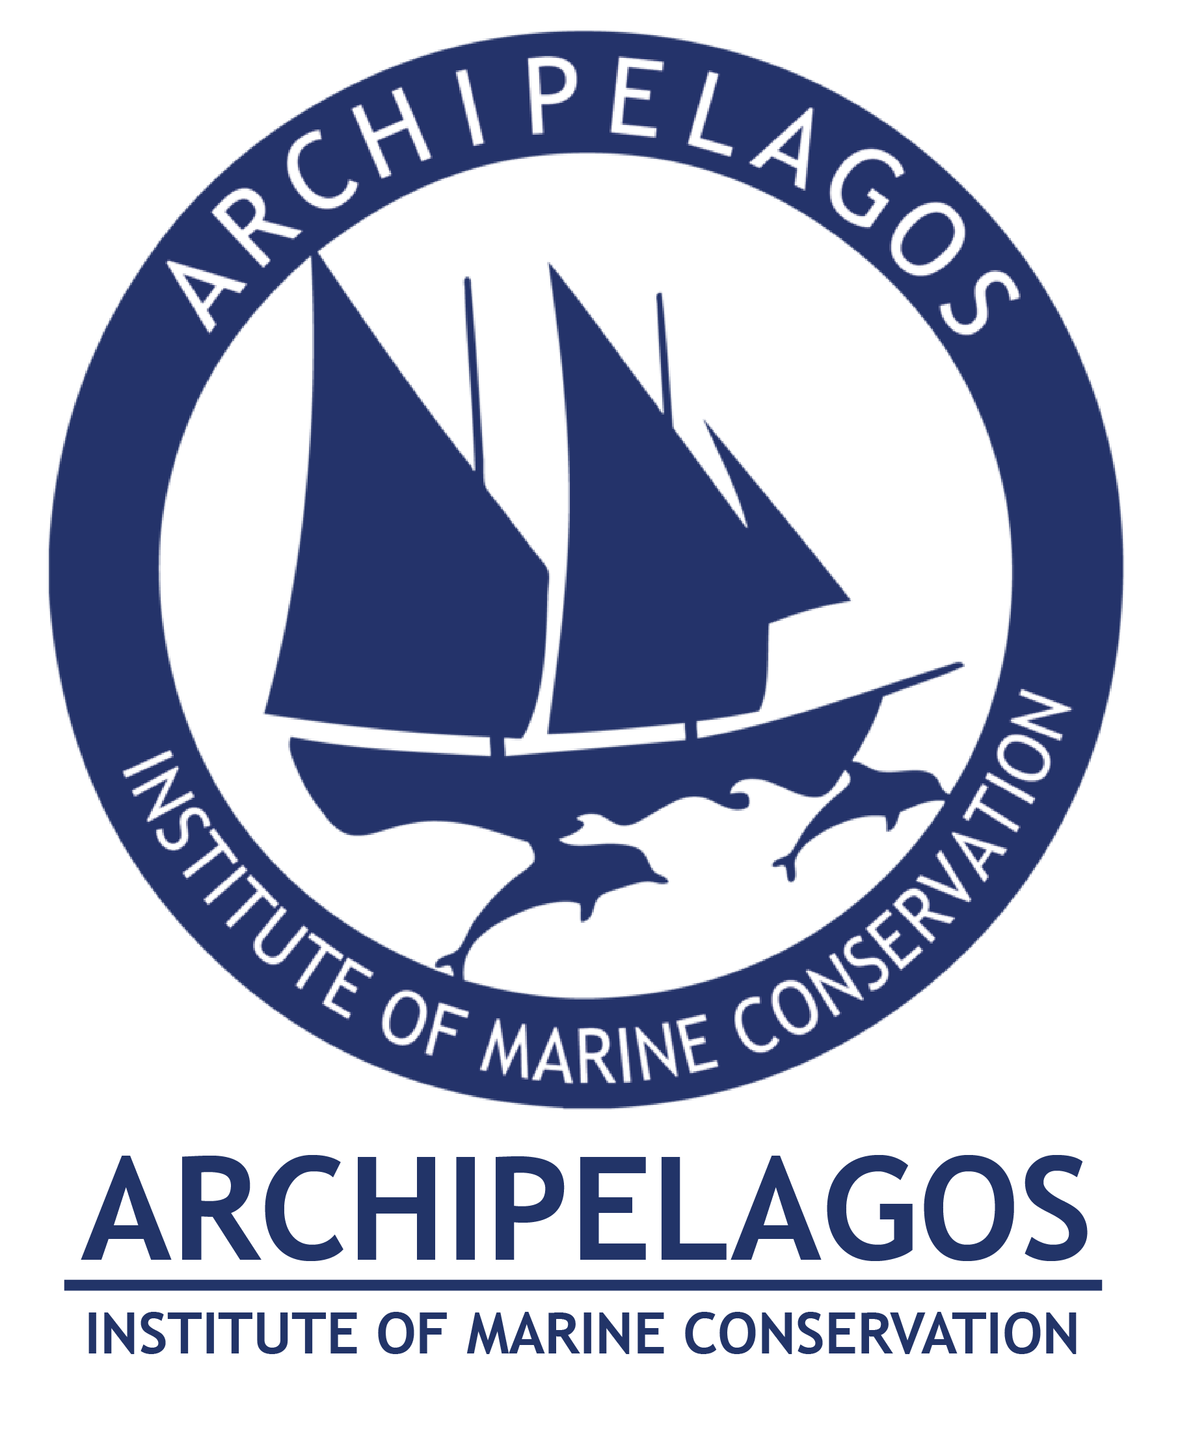 Archipelagos logo with text